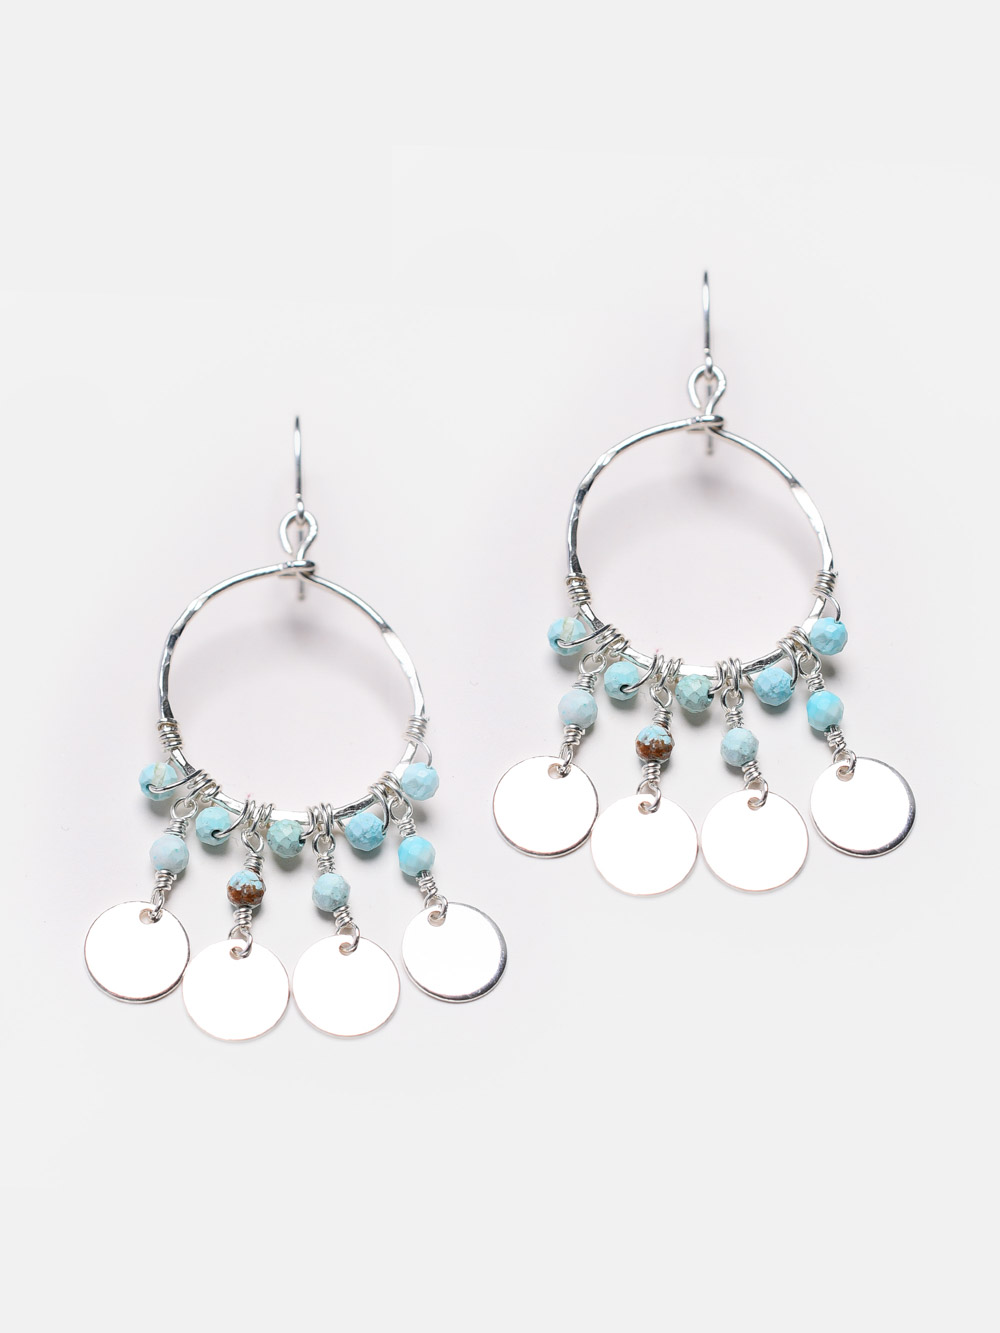 925 sterling silver hoop earrings with semi-precious stones